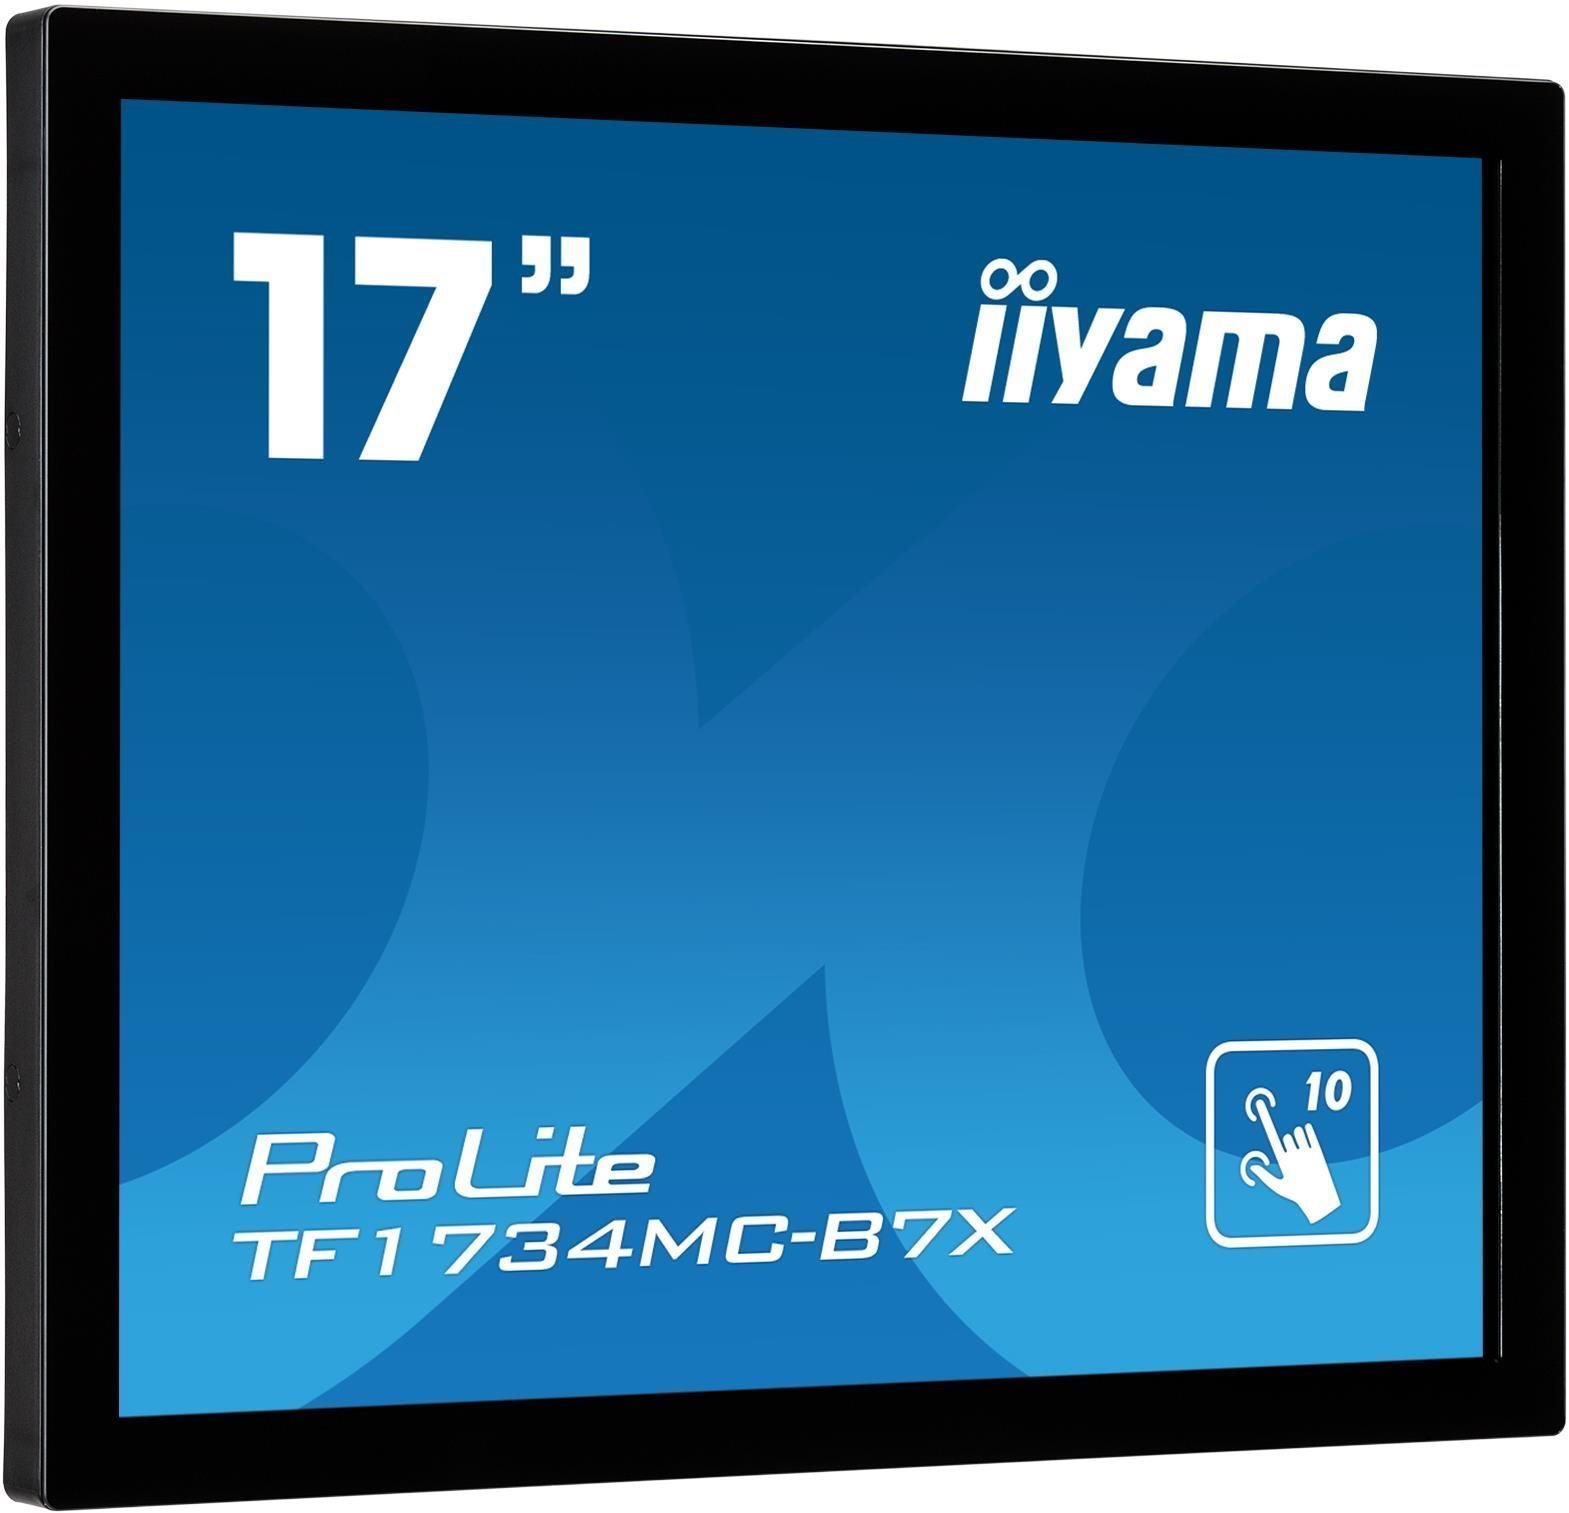 LCD Monitor 17“ iiyama ProLite TF1734MC-B7X Lateral view